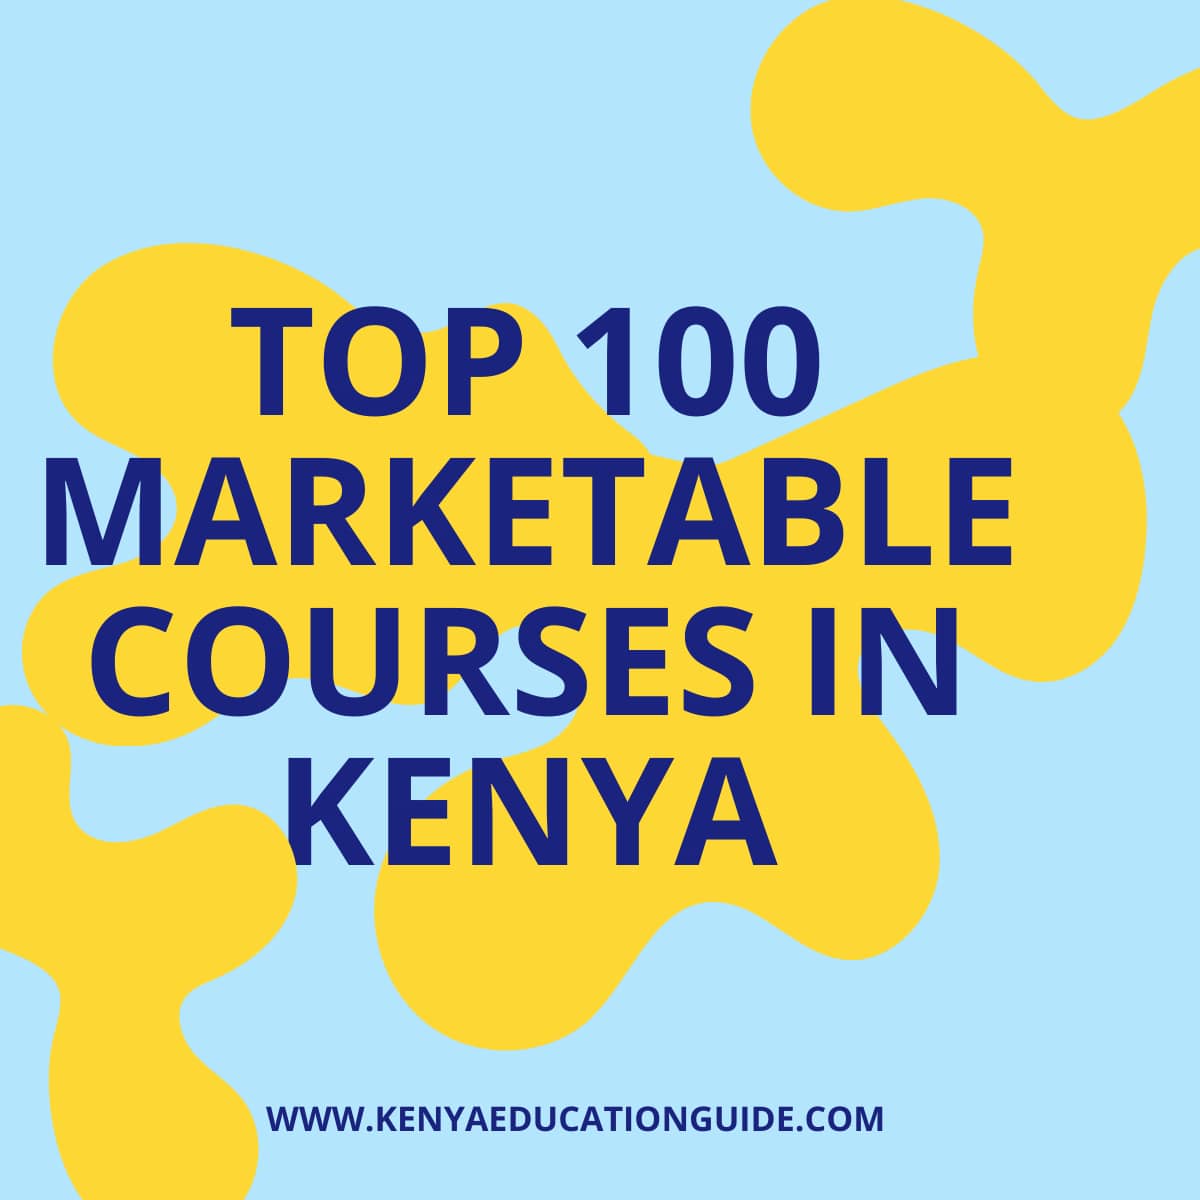 Top 100 marketable courses in Kenya